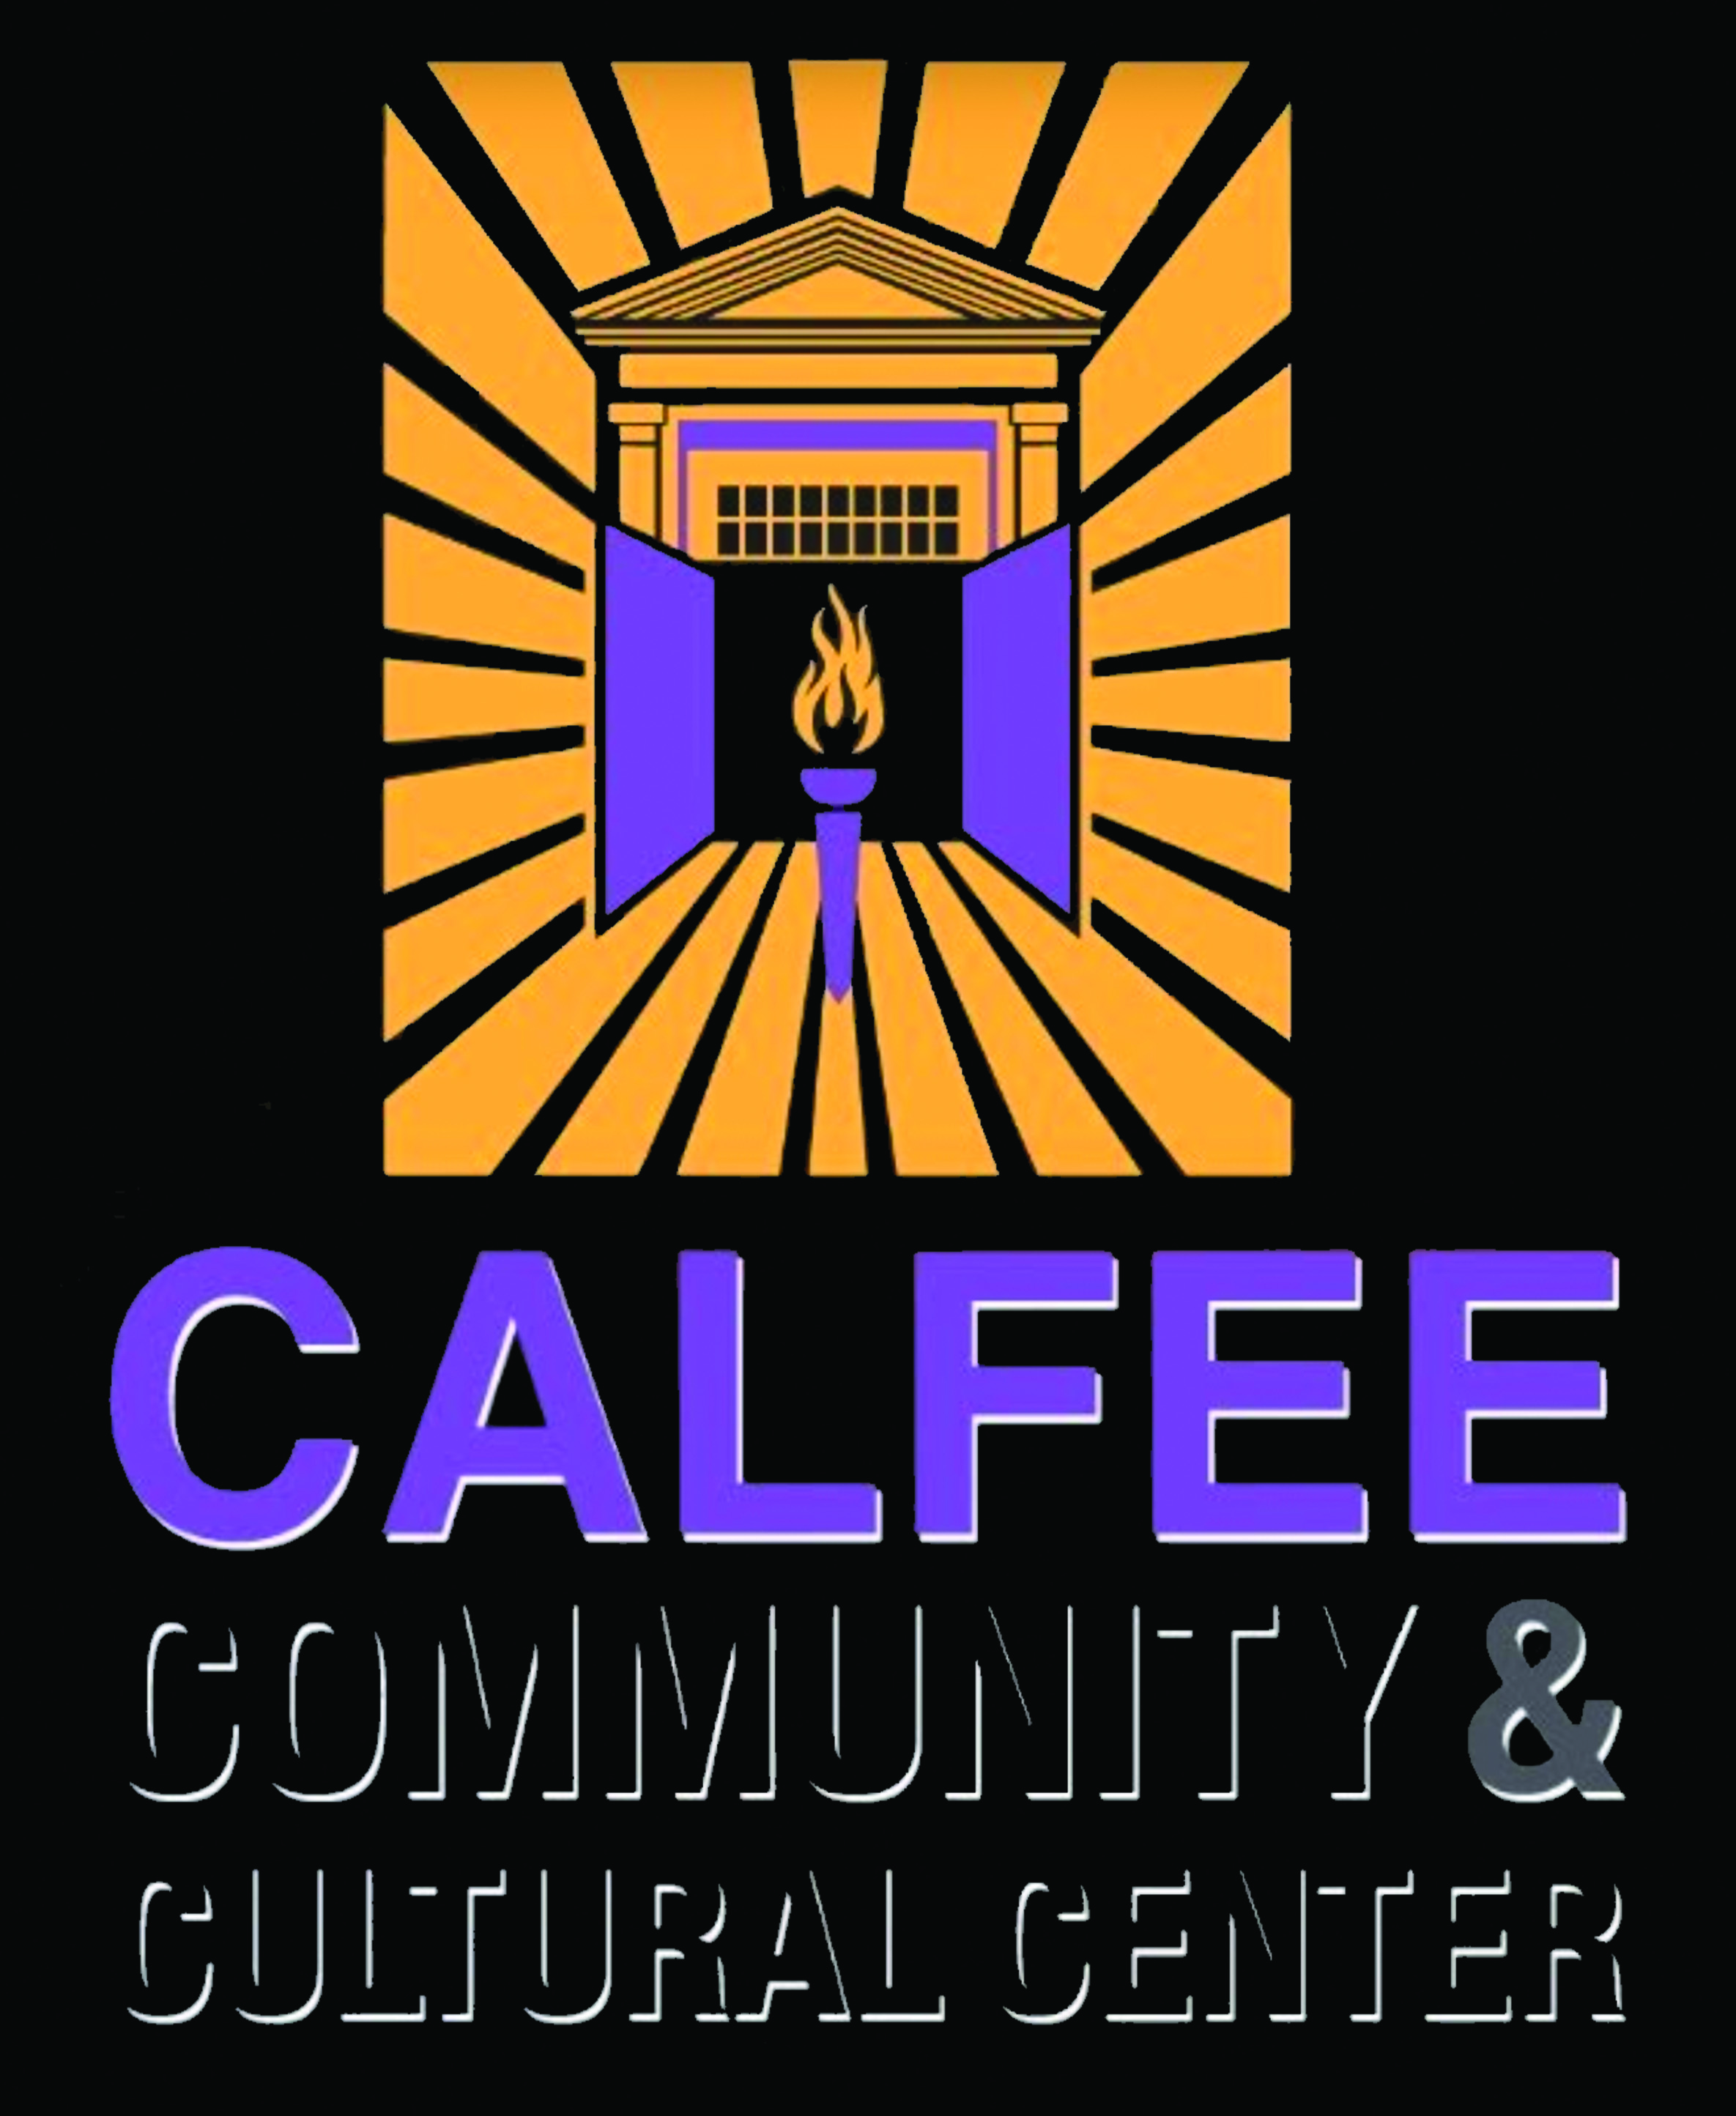 Calfee Community & Cultural Center